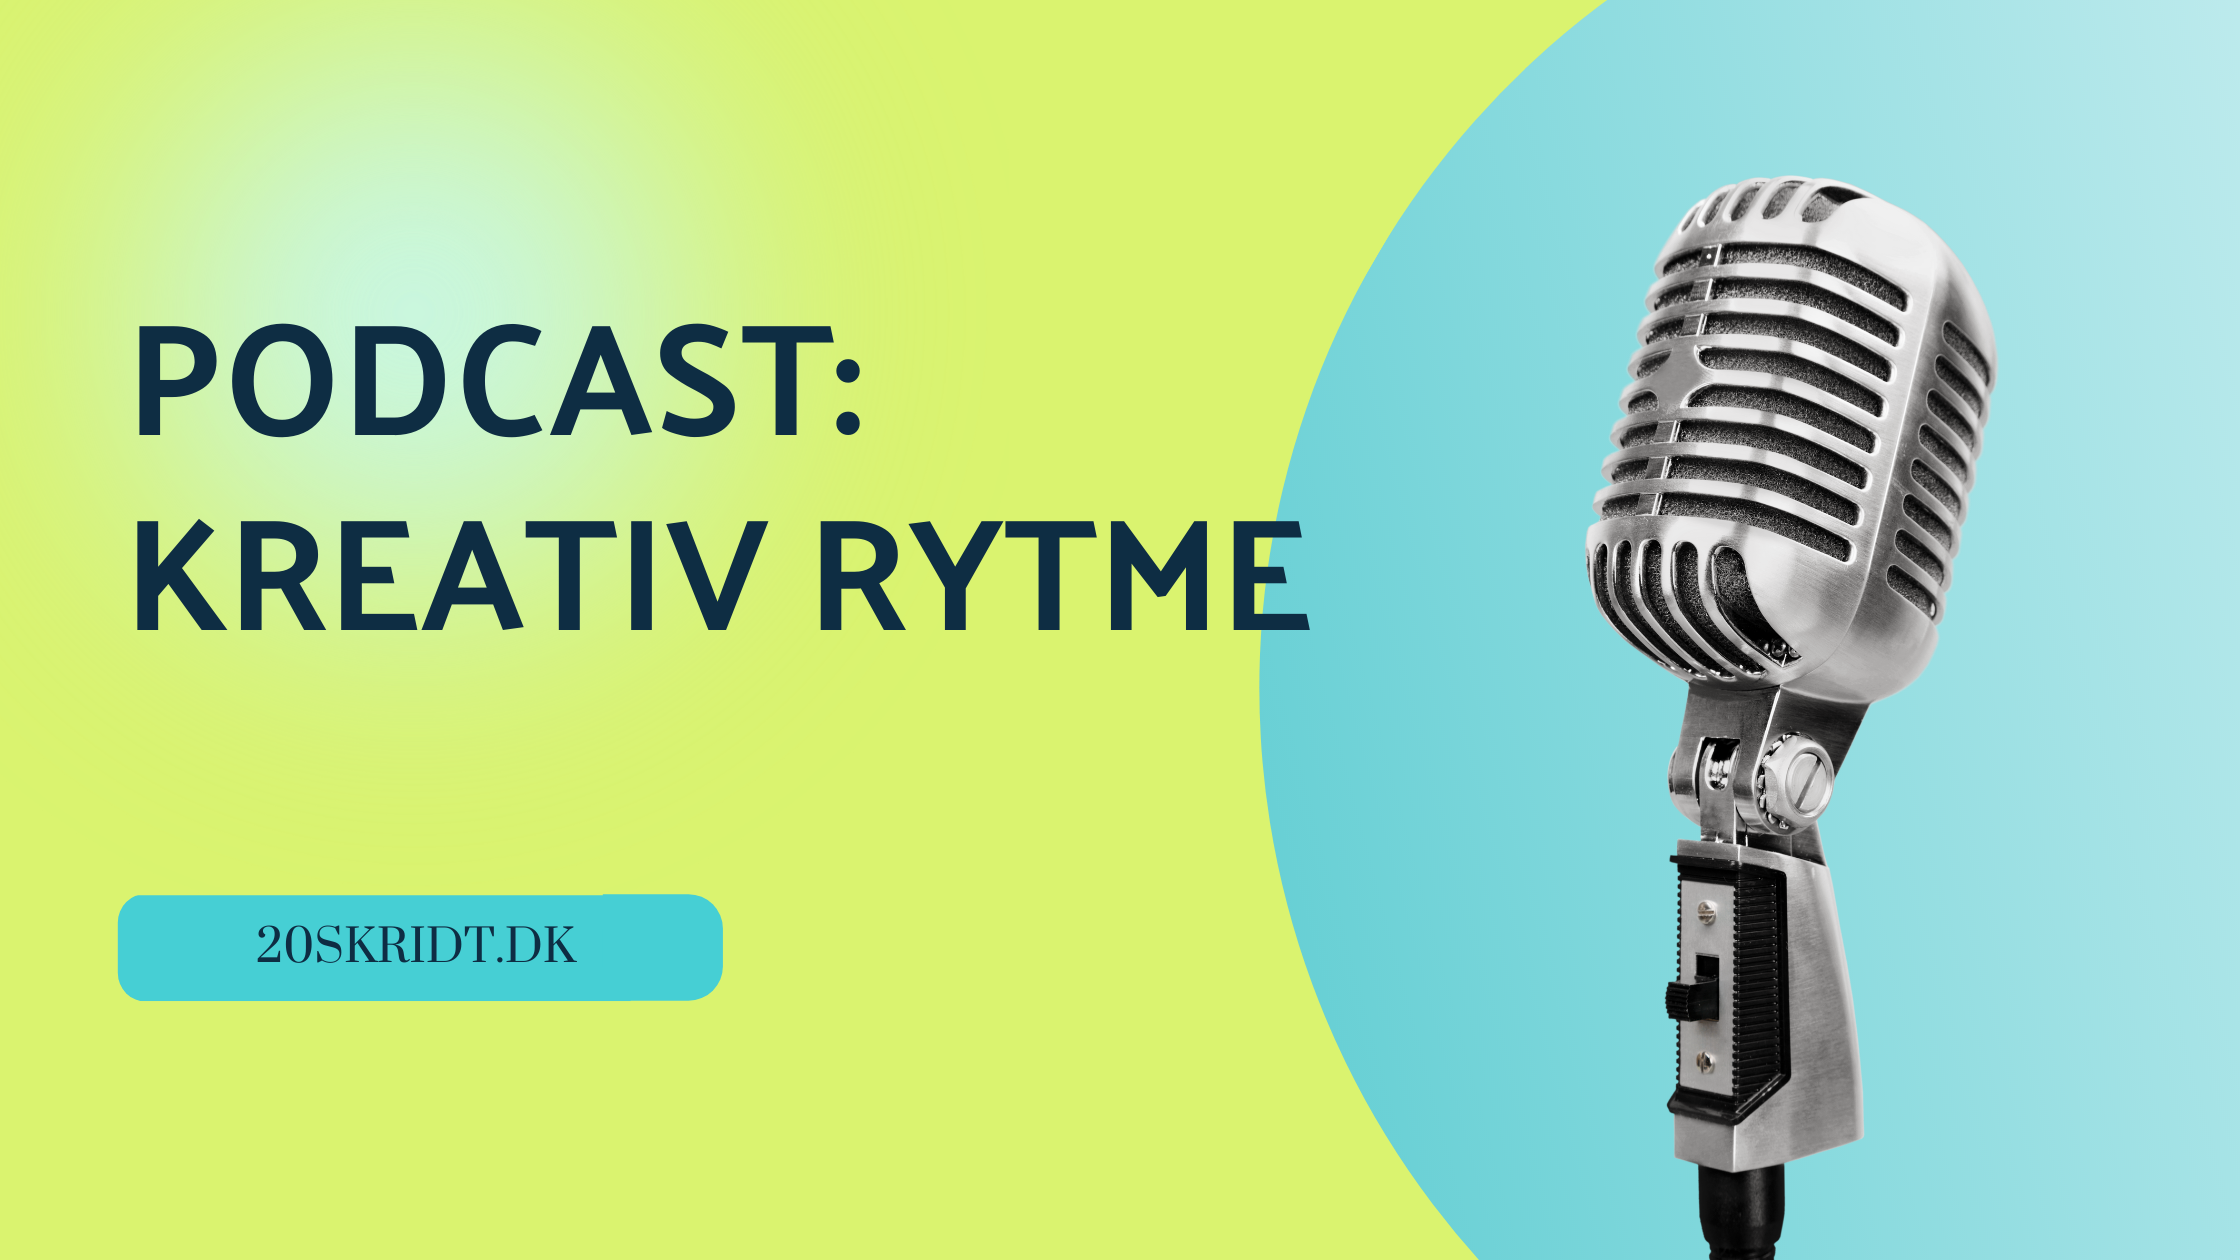 Podcast: Kreativ rytme